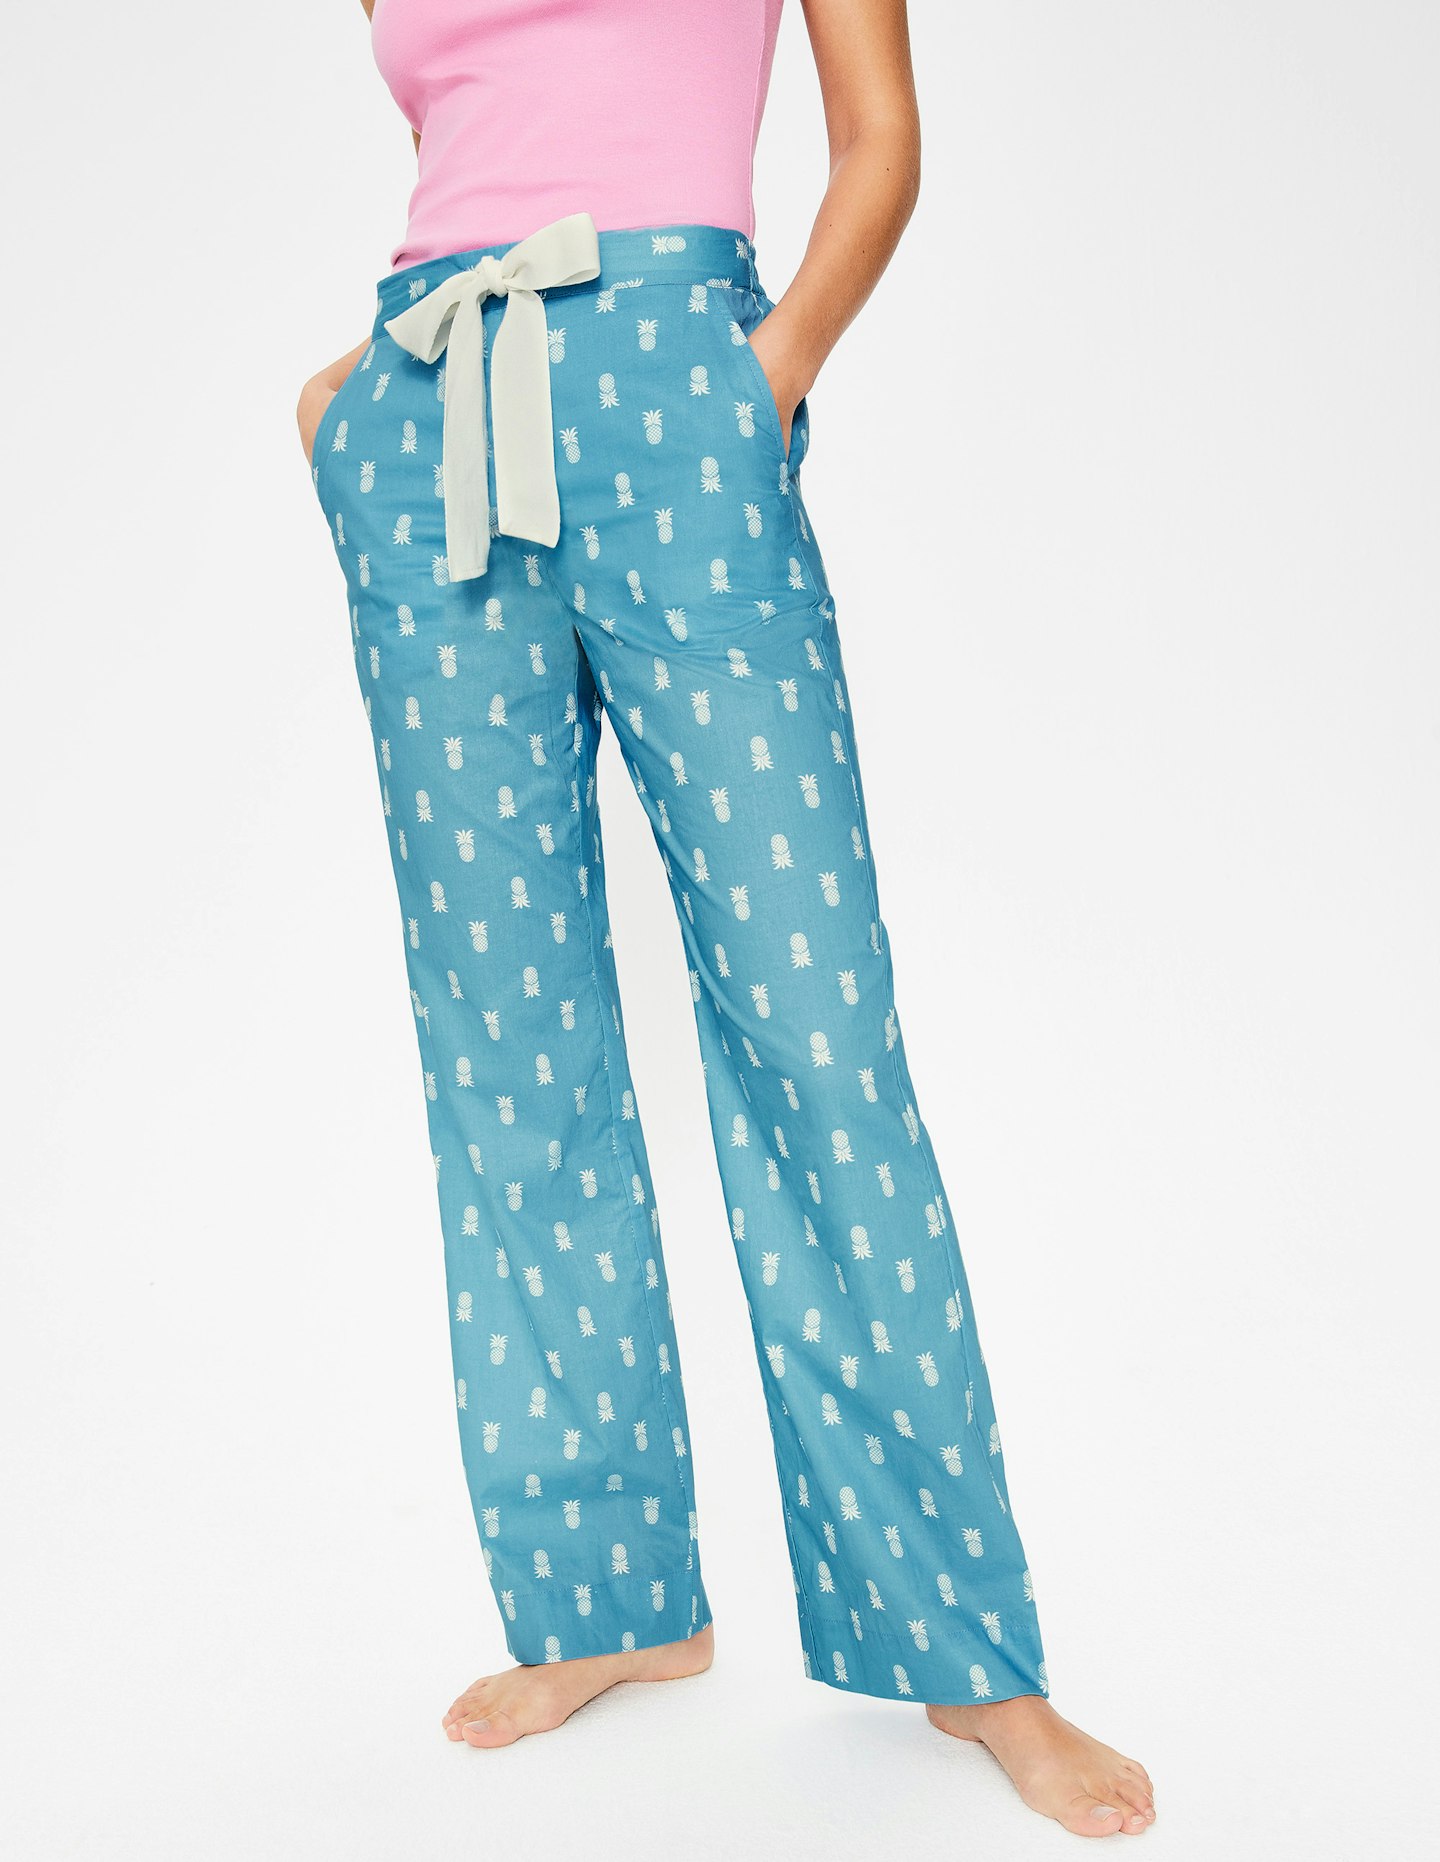 Boden, Pineapple Print Pyjama Trousers, £30